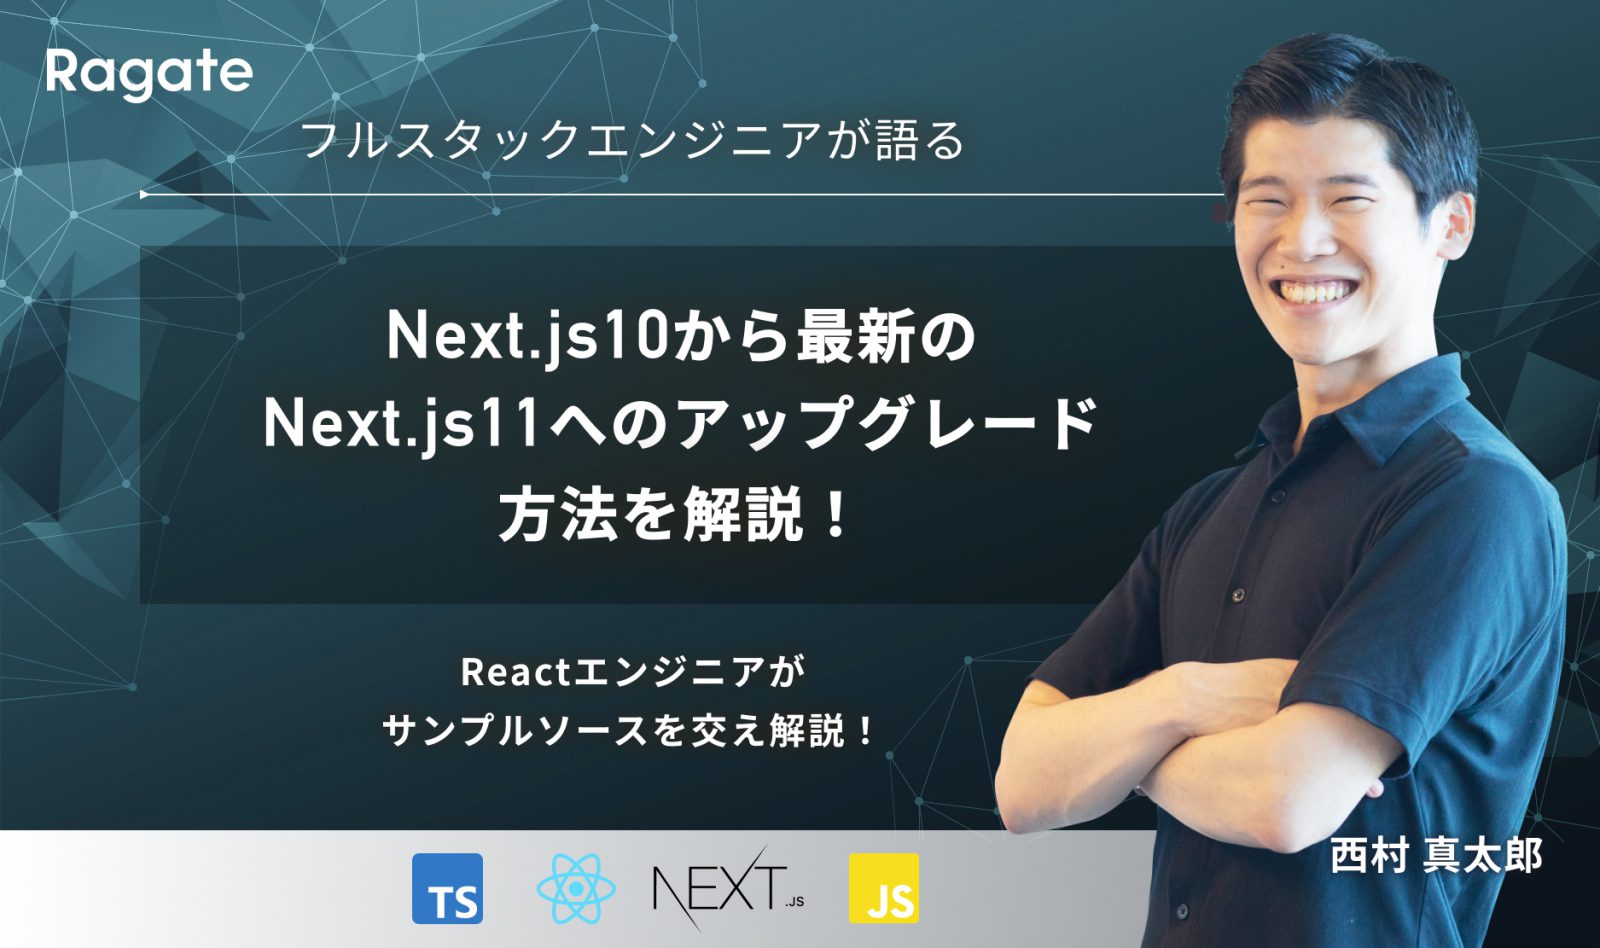 Next.js10から最新のNext.js11へのアップグレード方法を解説！Reactエンジニアがサンプルソースを交え解説！